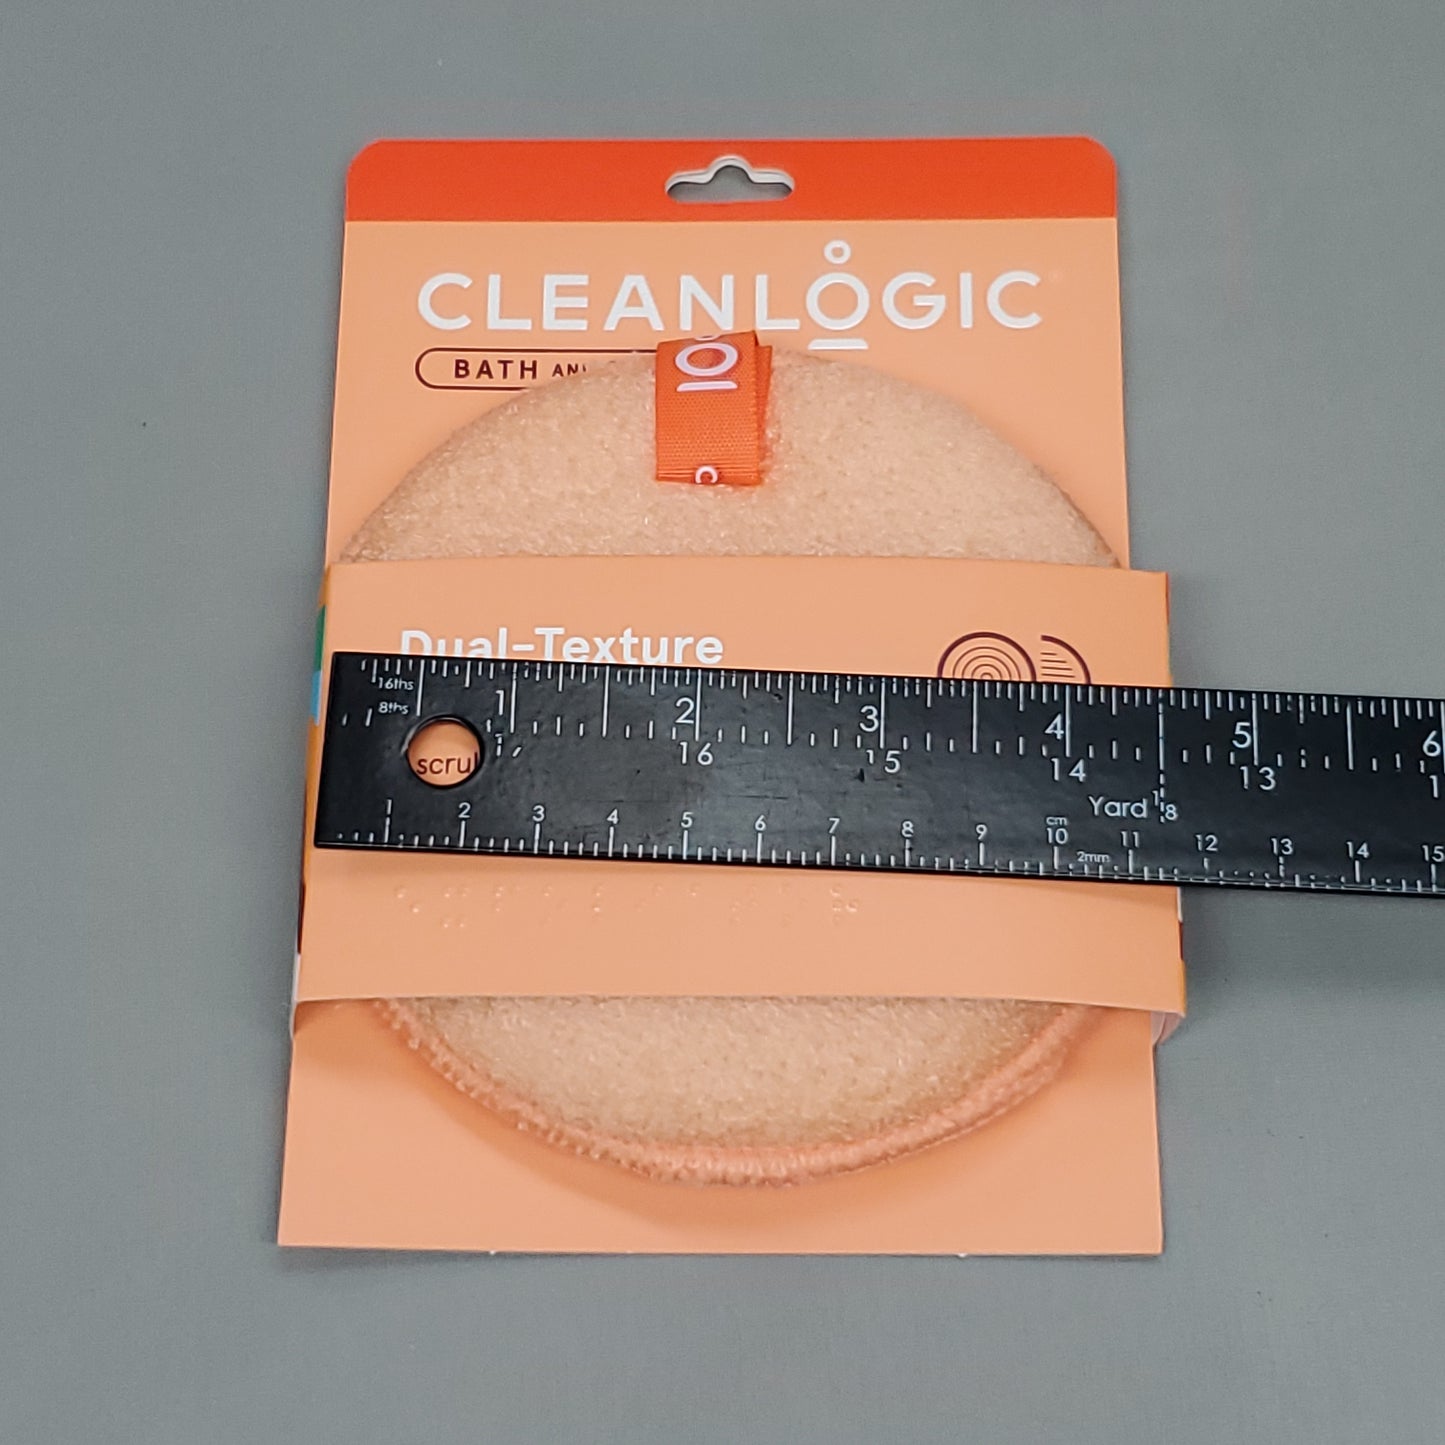 CLEANLOGIC 3 Pack of Dual-Texture Body Exfoliator Scrubber 4.92"X.91" Orange (New)